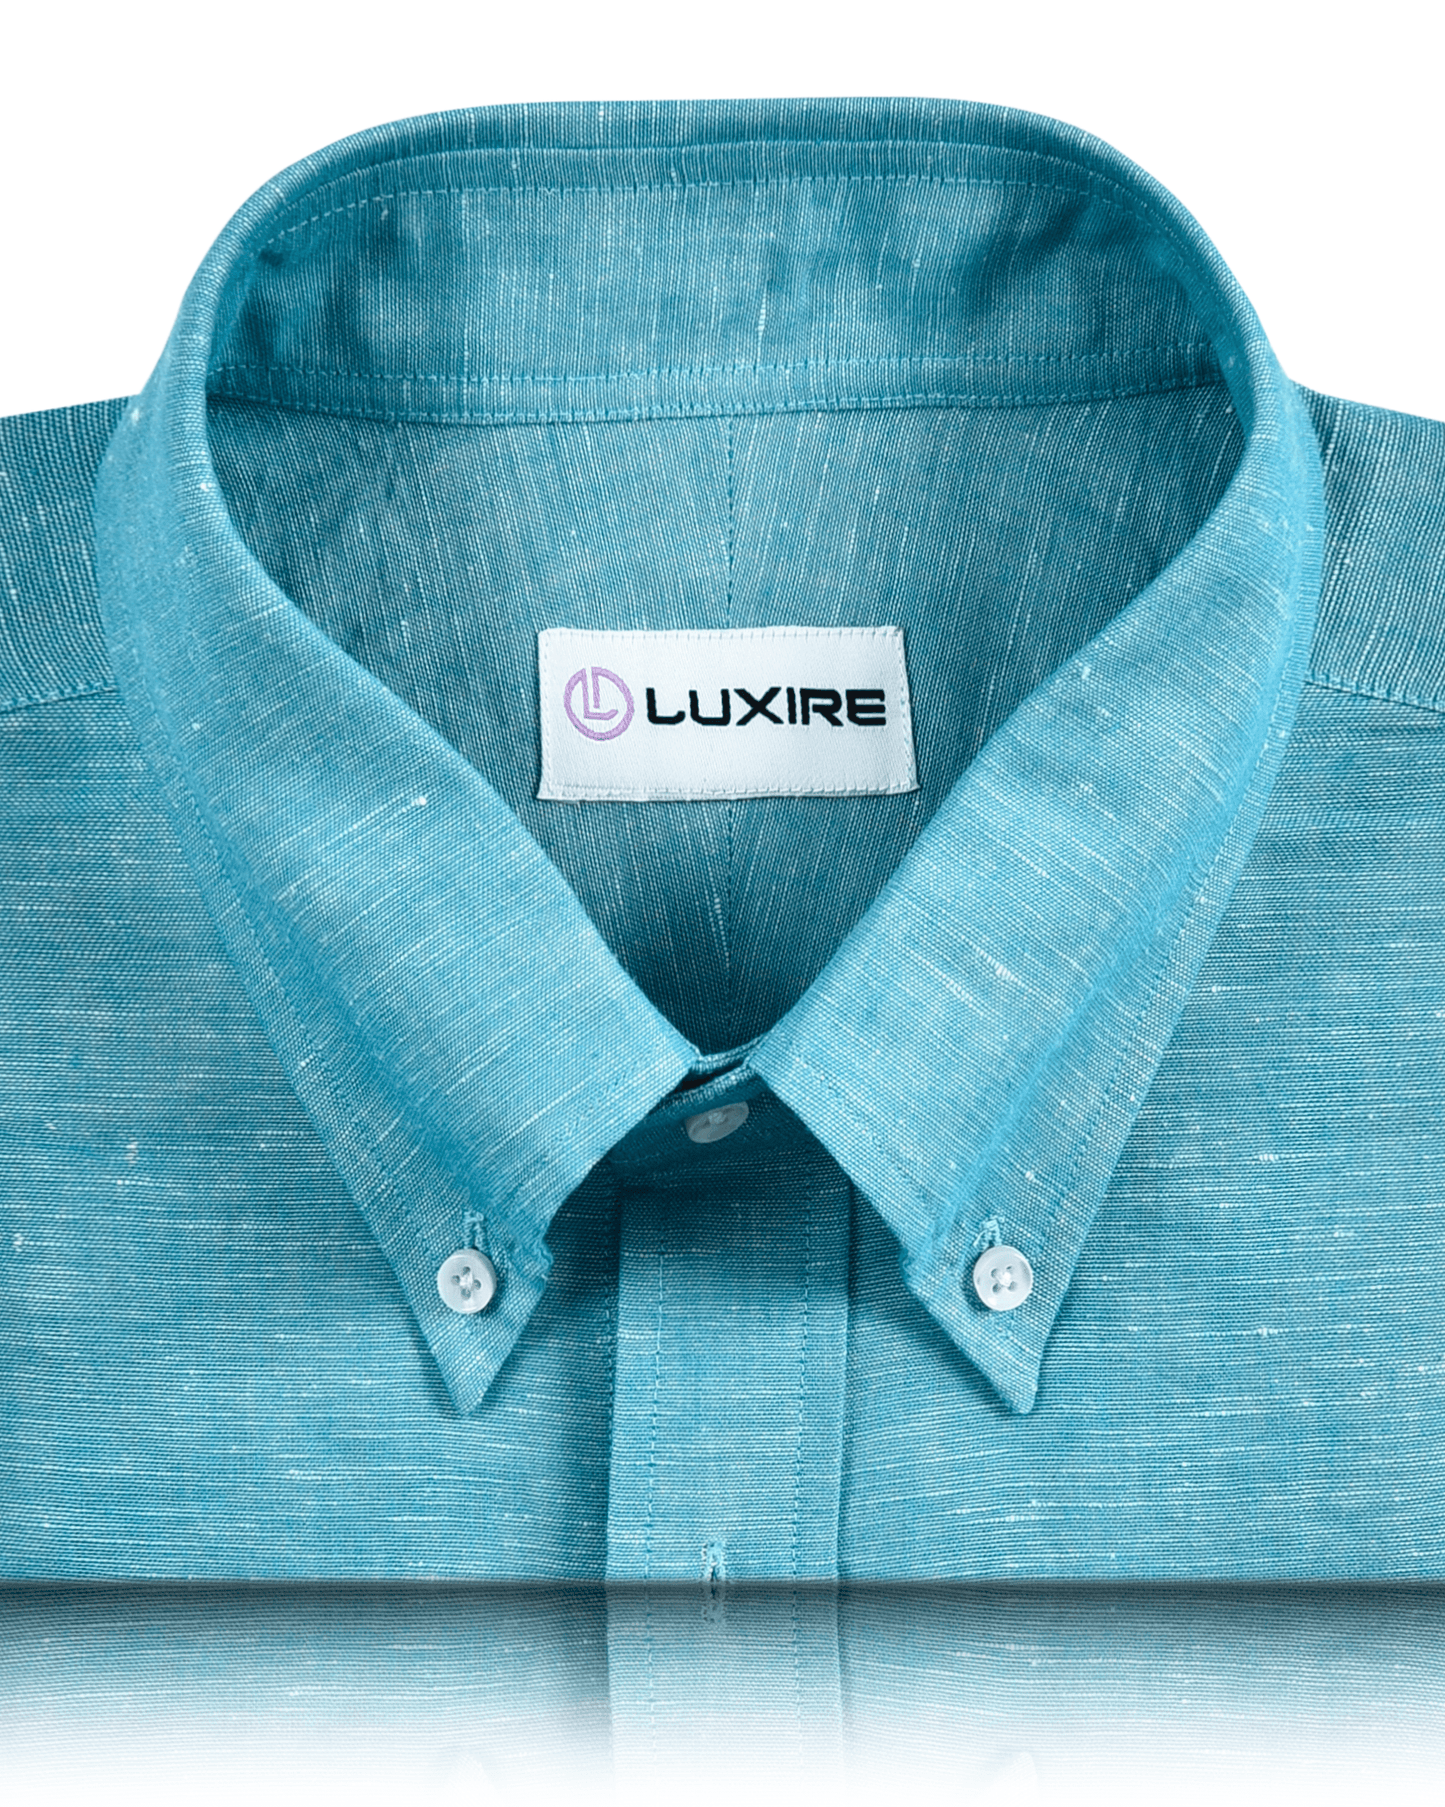 Cotton Linen: Turquoise Blue Chambray Shirt